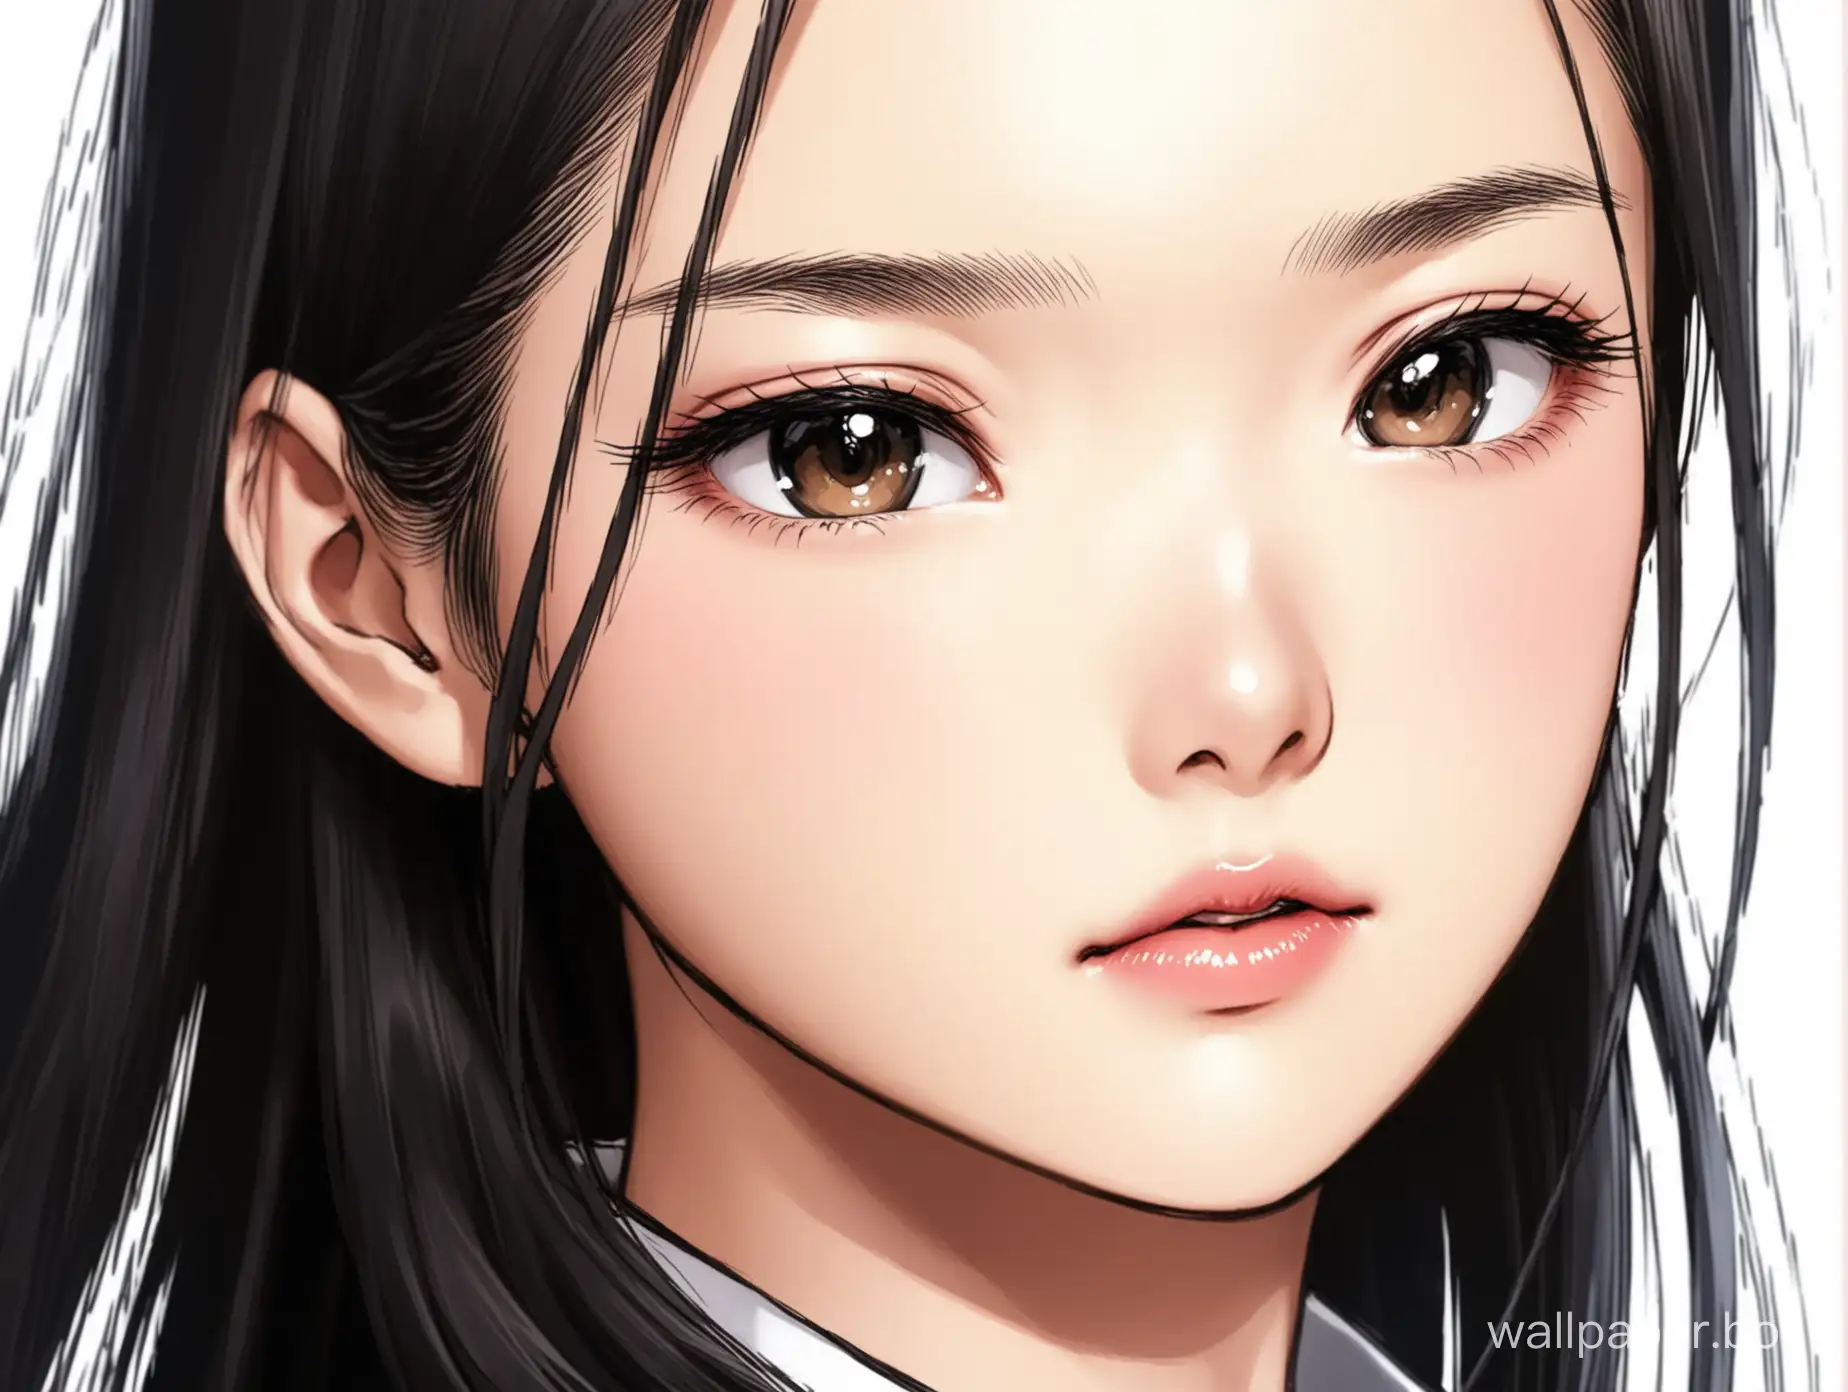 CloseUp-Portrait-of-Jun-Jihyun-at-Age-23-My-Sassy-Girl-Actress-in-High-Detail-8K-Image